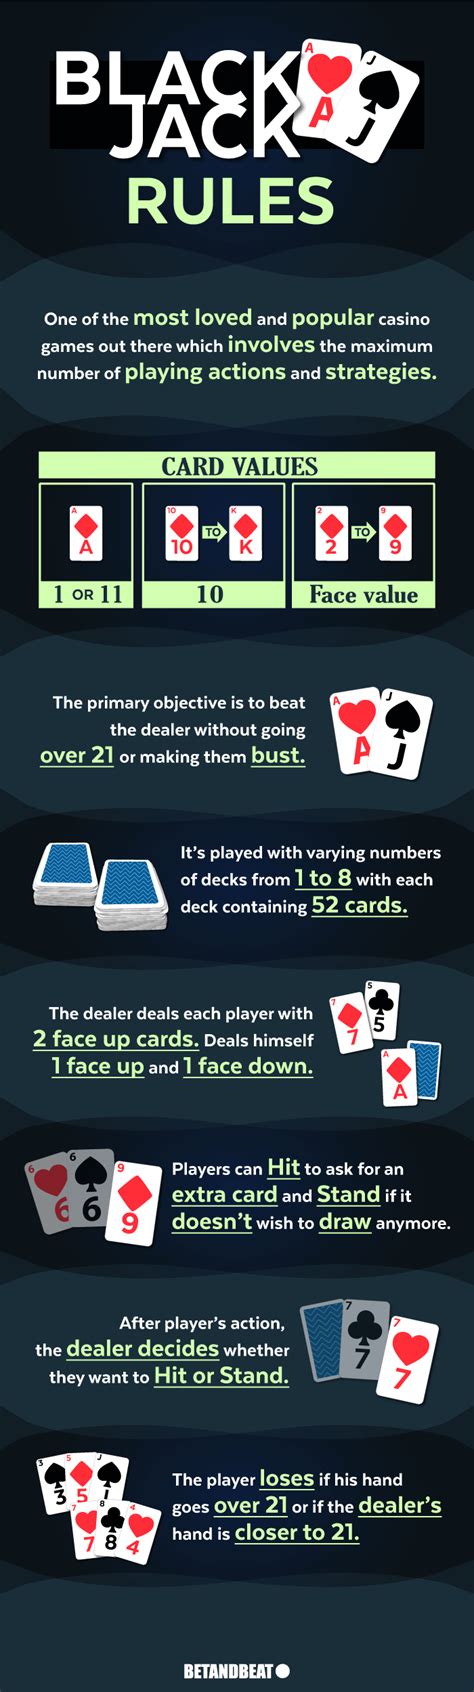 blackjack rules deck of cards kpzq canada